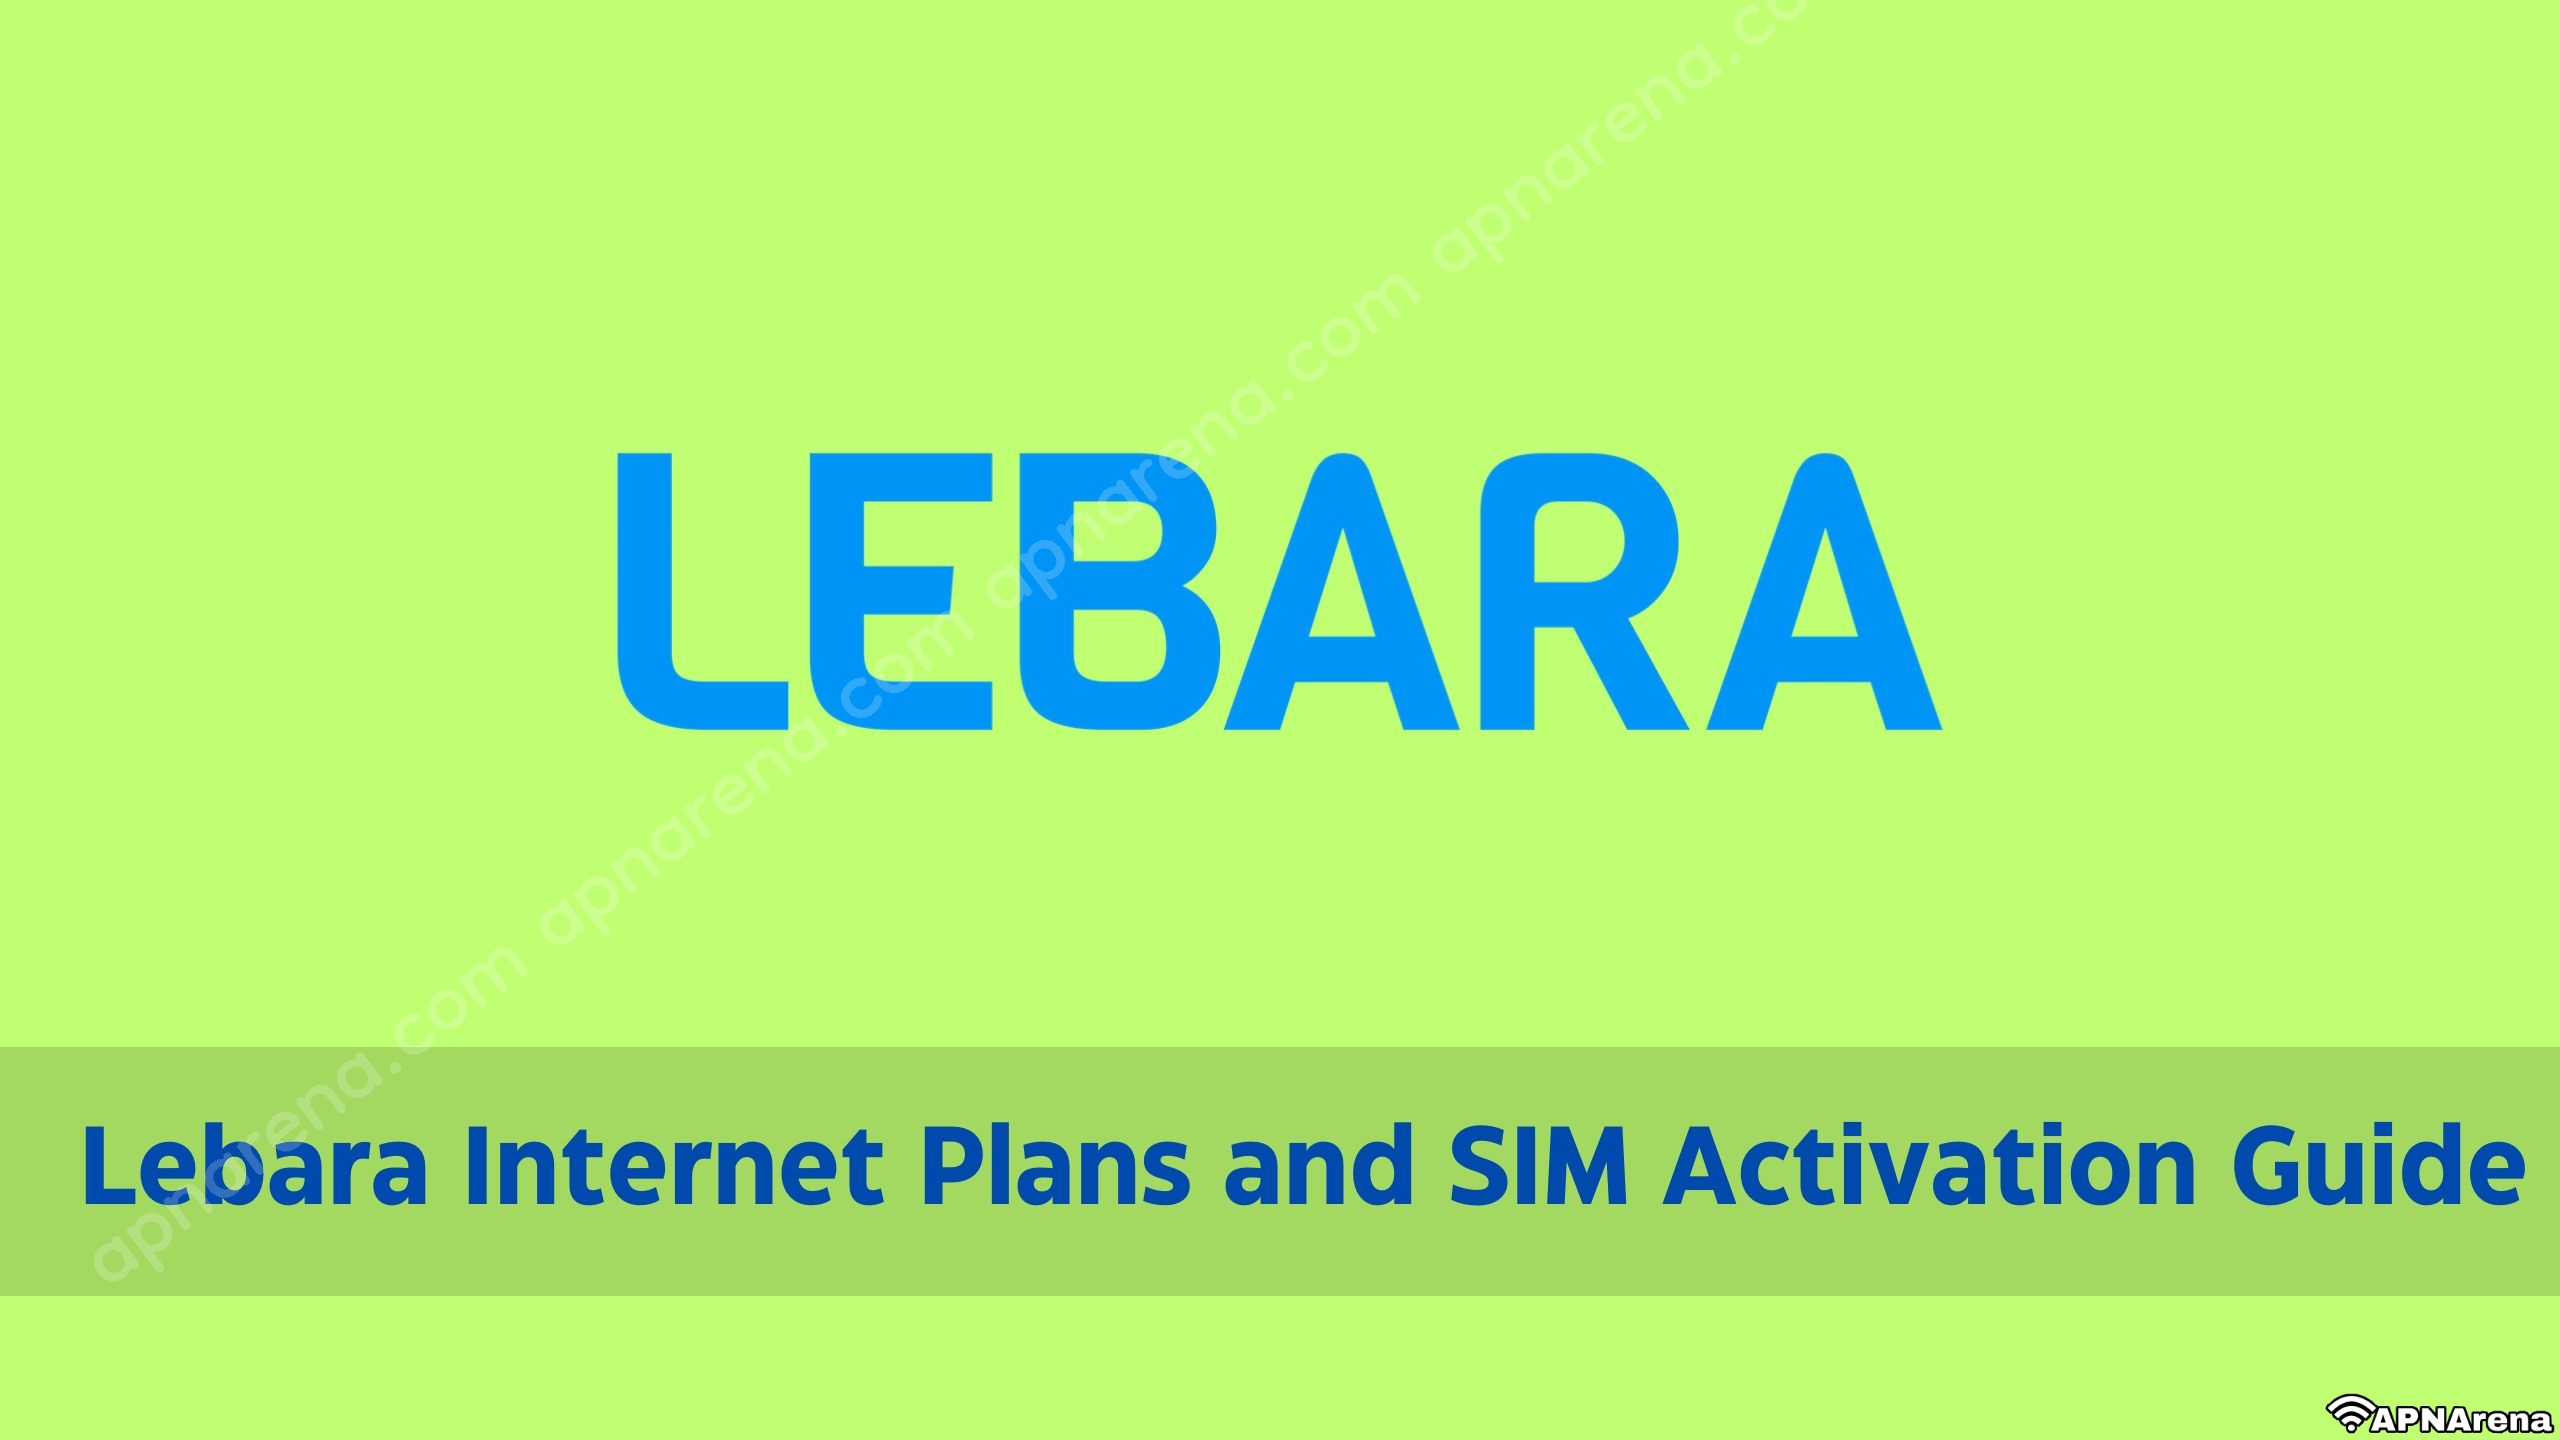 Lebara France Internet Plans and SIM Activation Guide